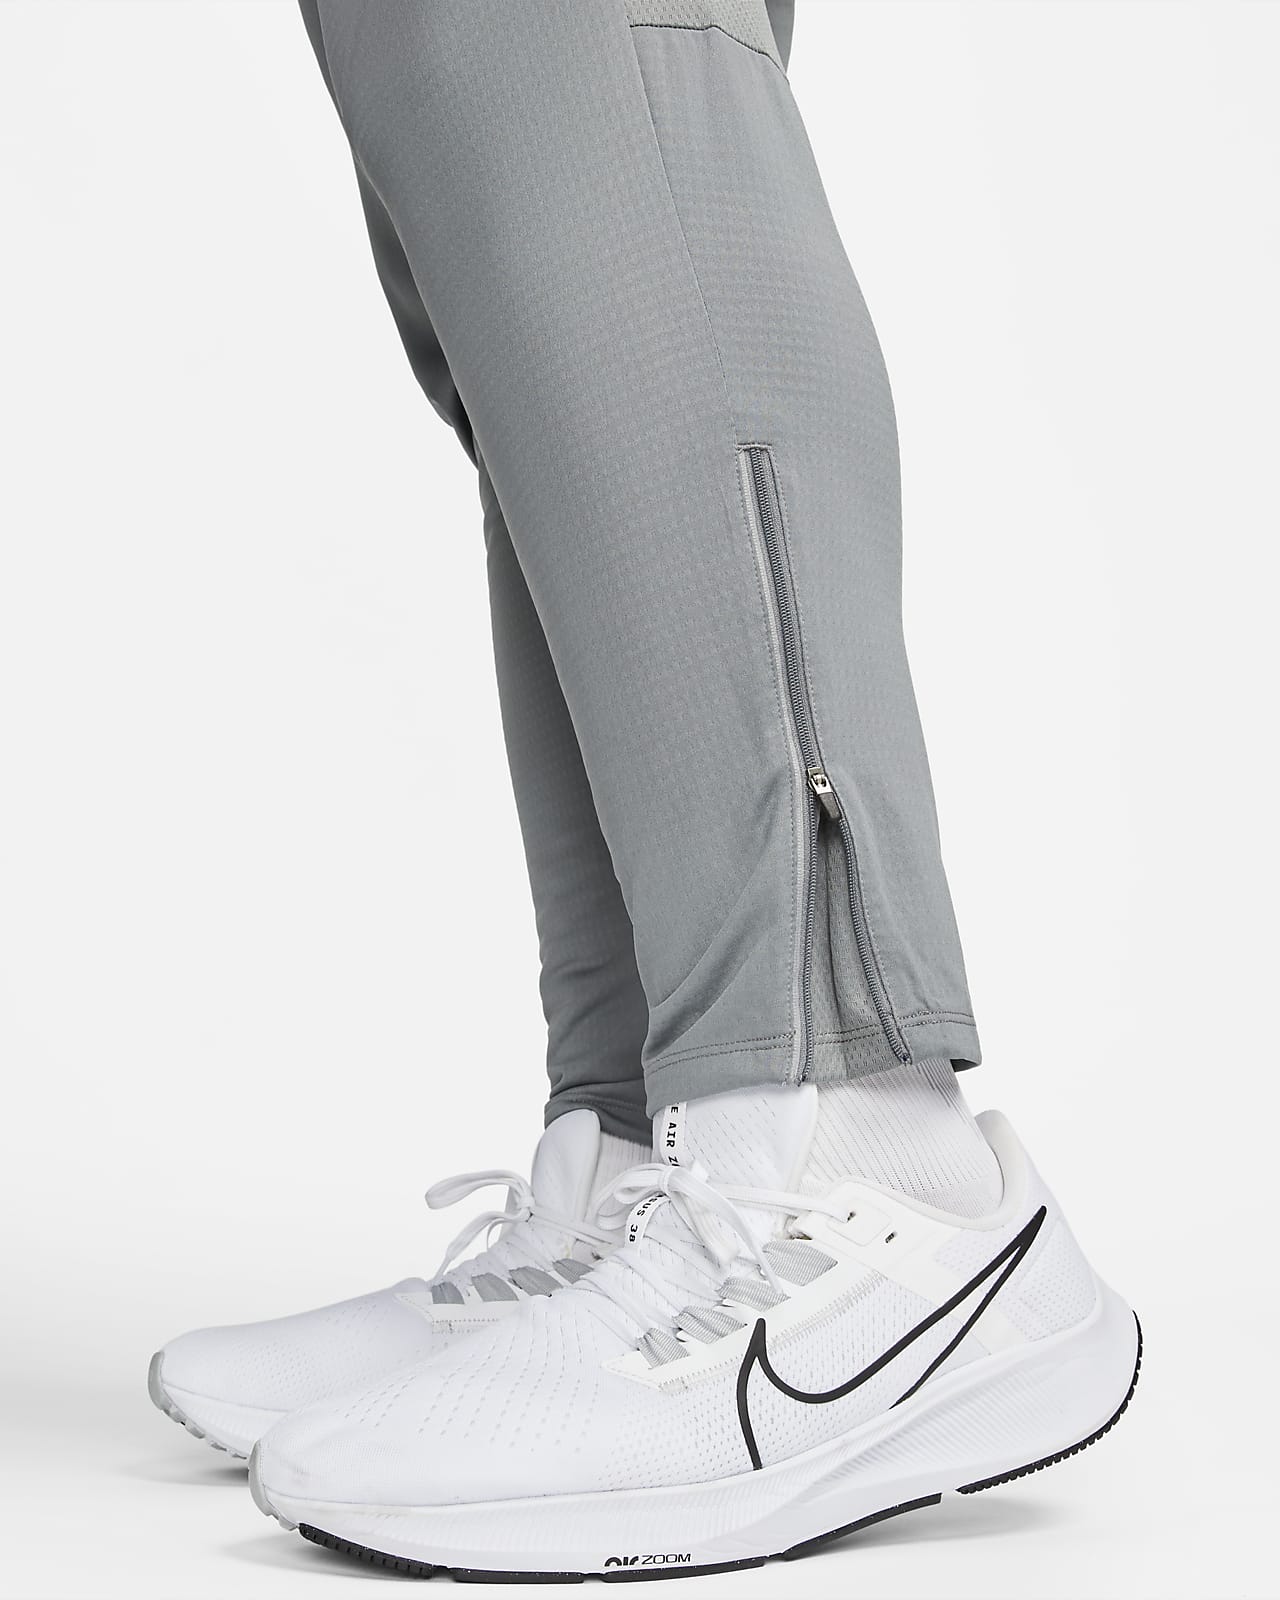 Shop Dri-FIT Running Division Phenom Men's Slim-Fit Running Trousers | Nike  KSA